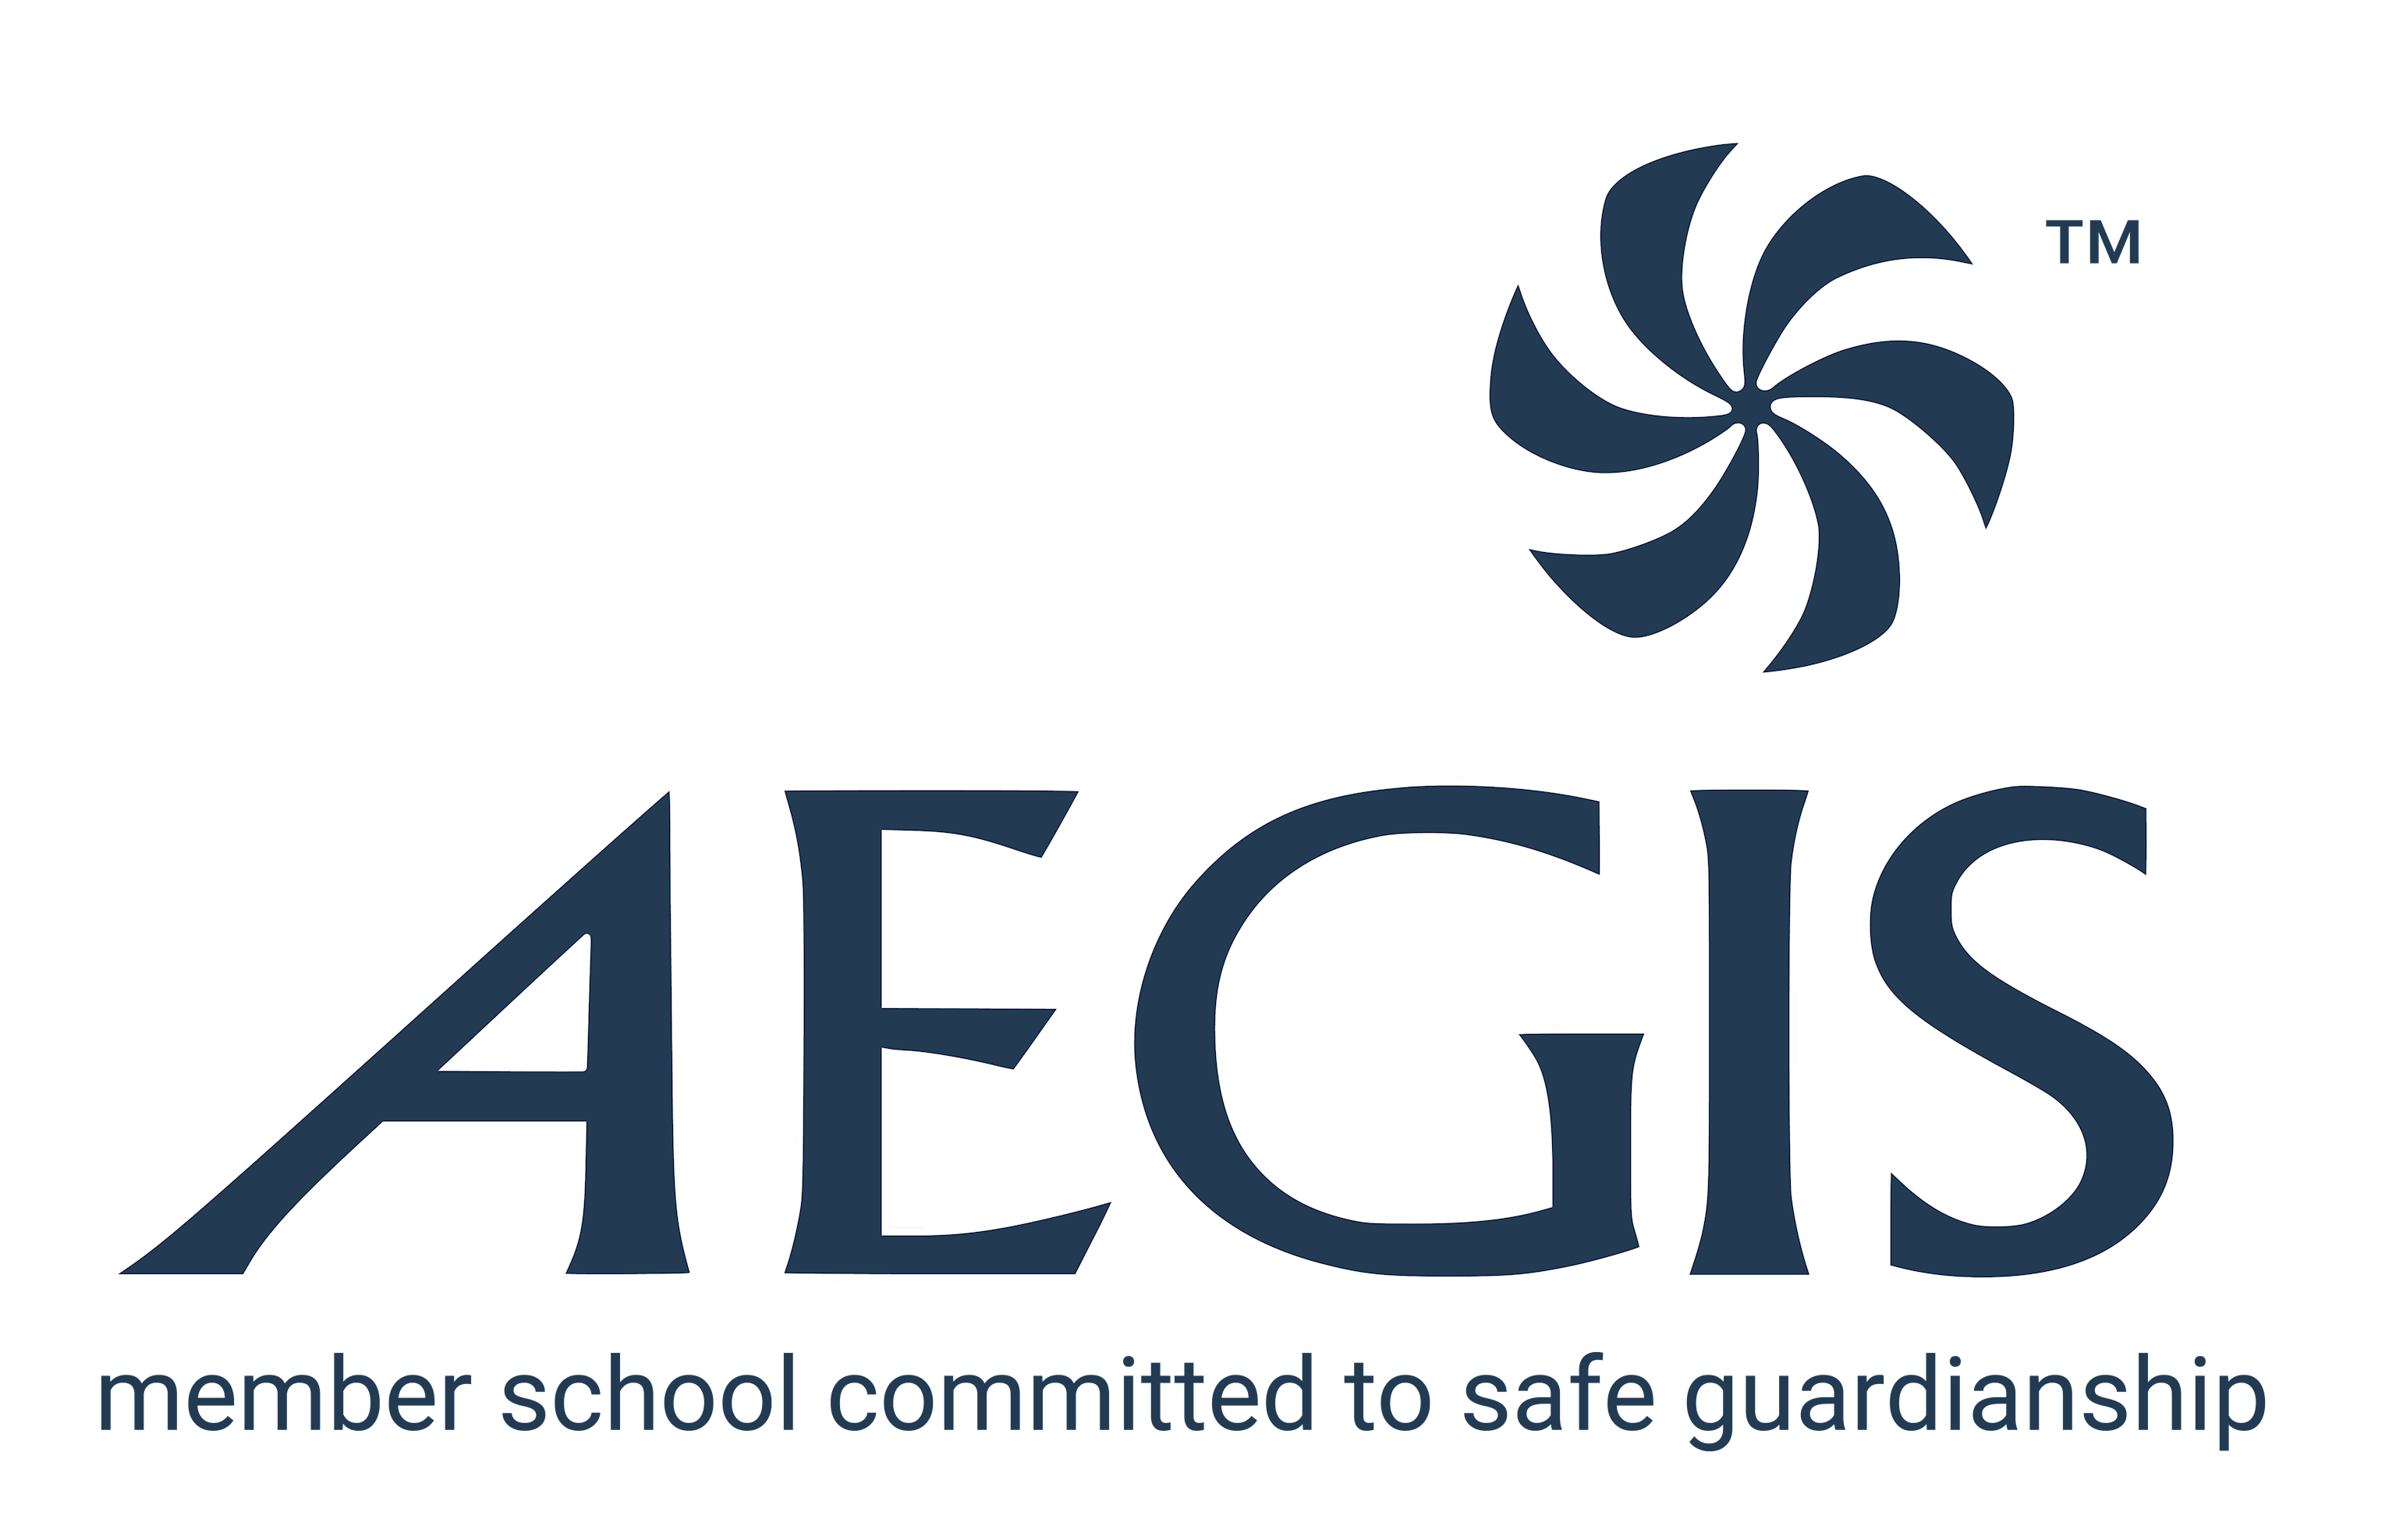 Farringtons School is joining AEGIS